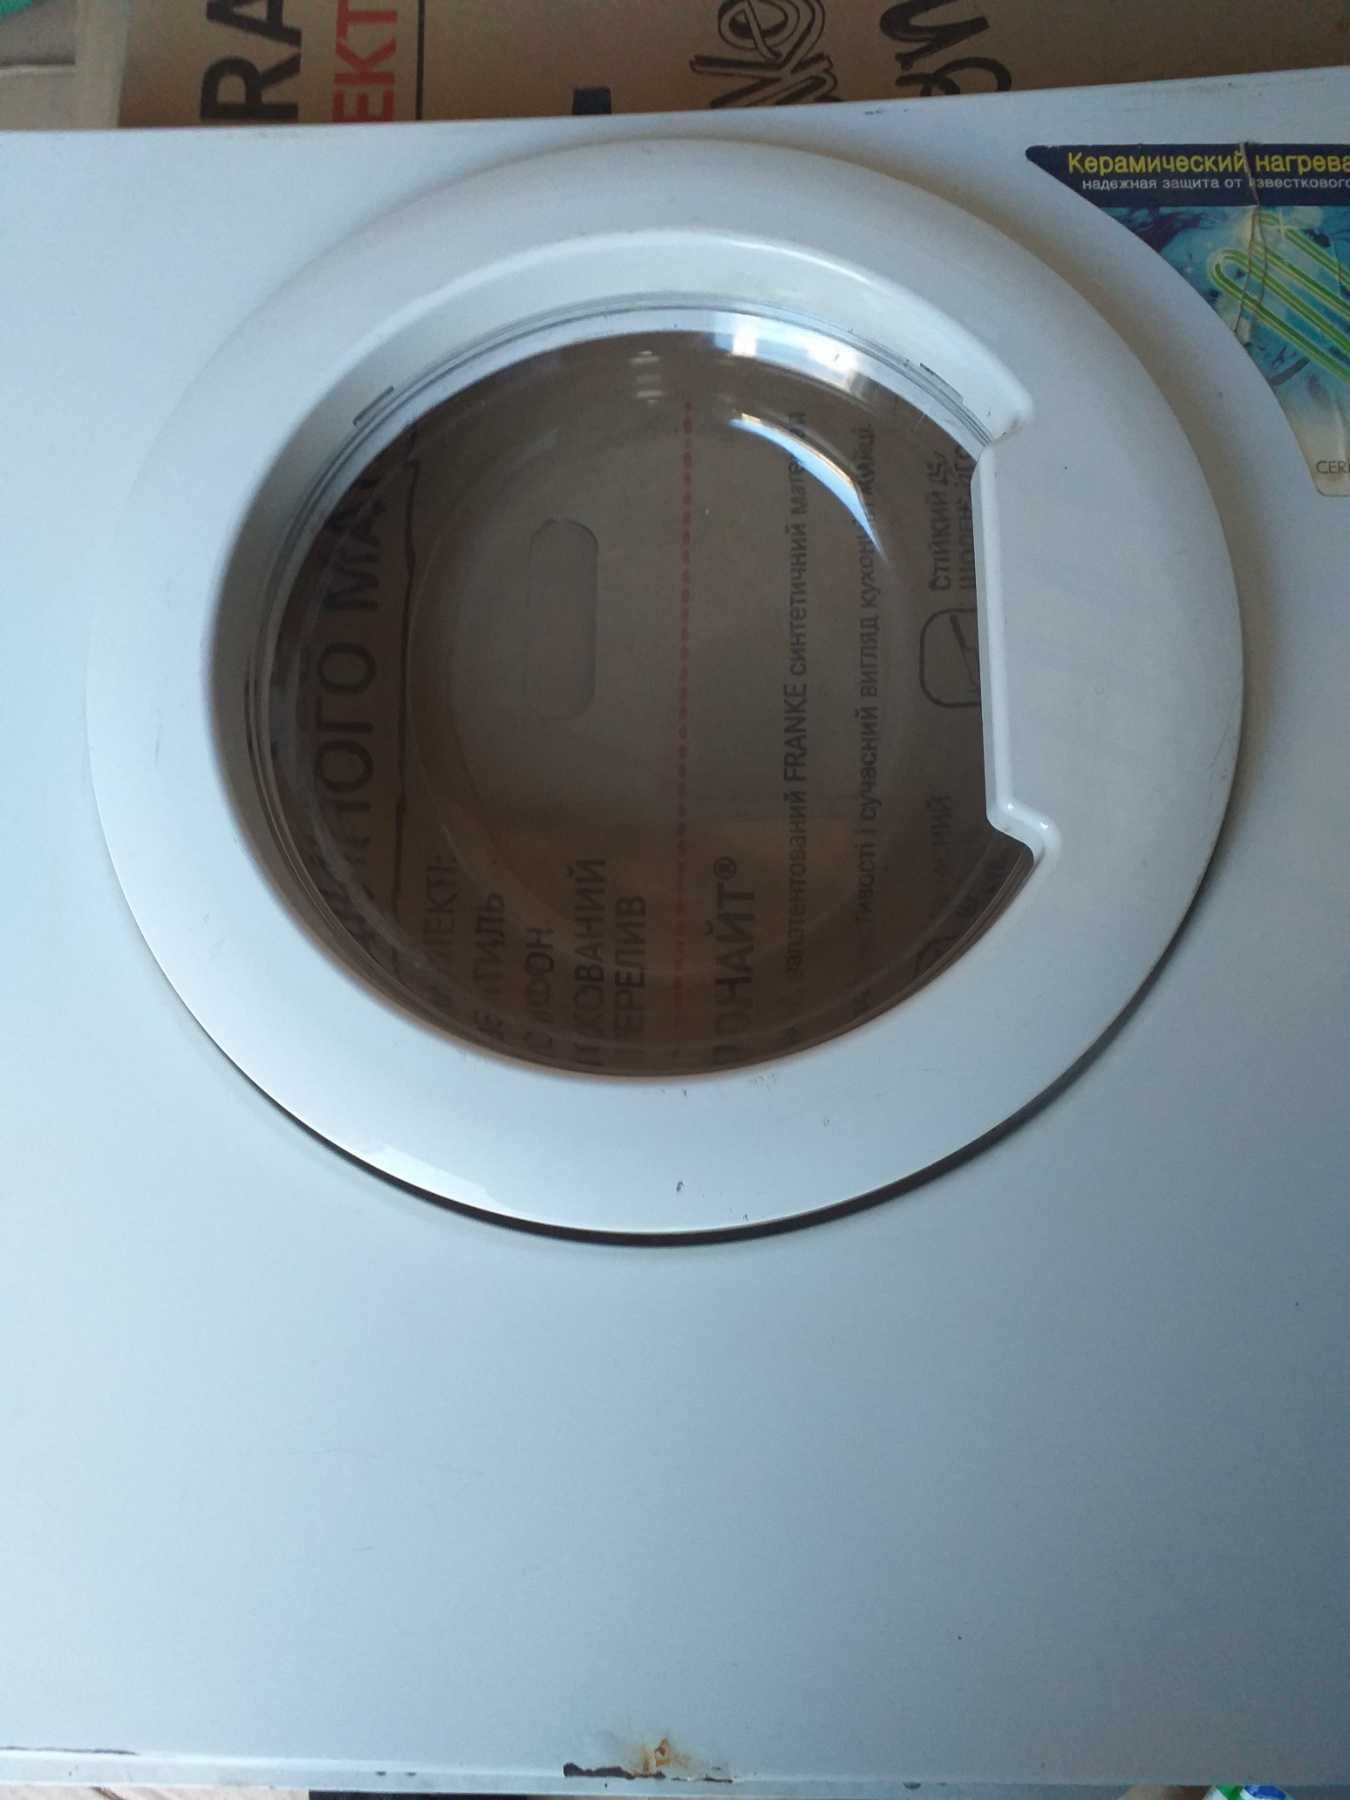 Запчастини до пральної машини Самсунг на 5.2кг.